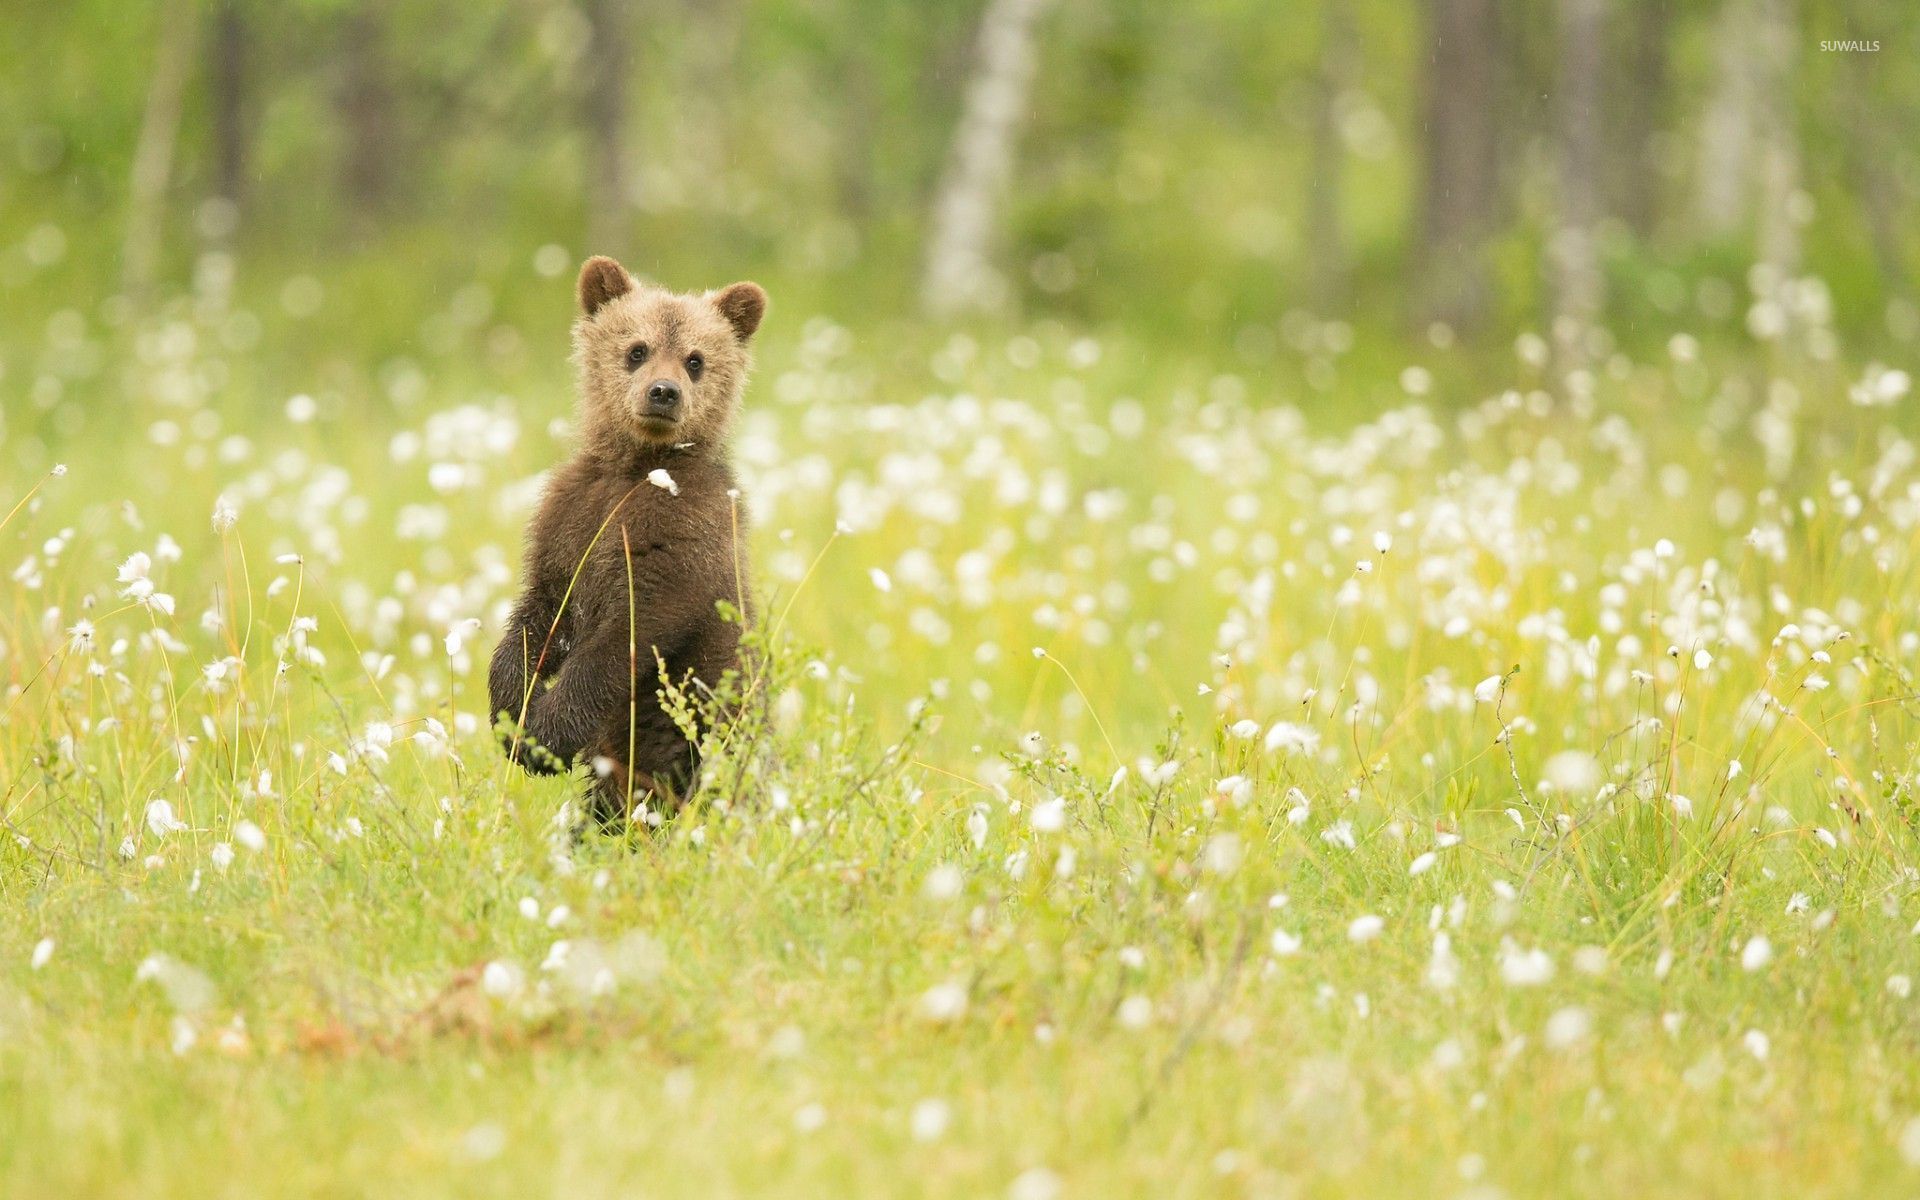 Adorable bear cub in the grass wallpaper wallpaper